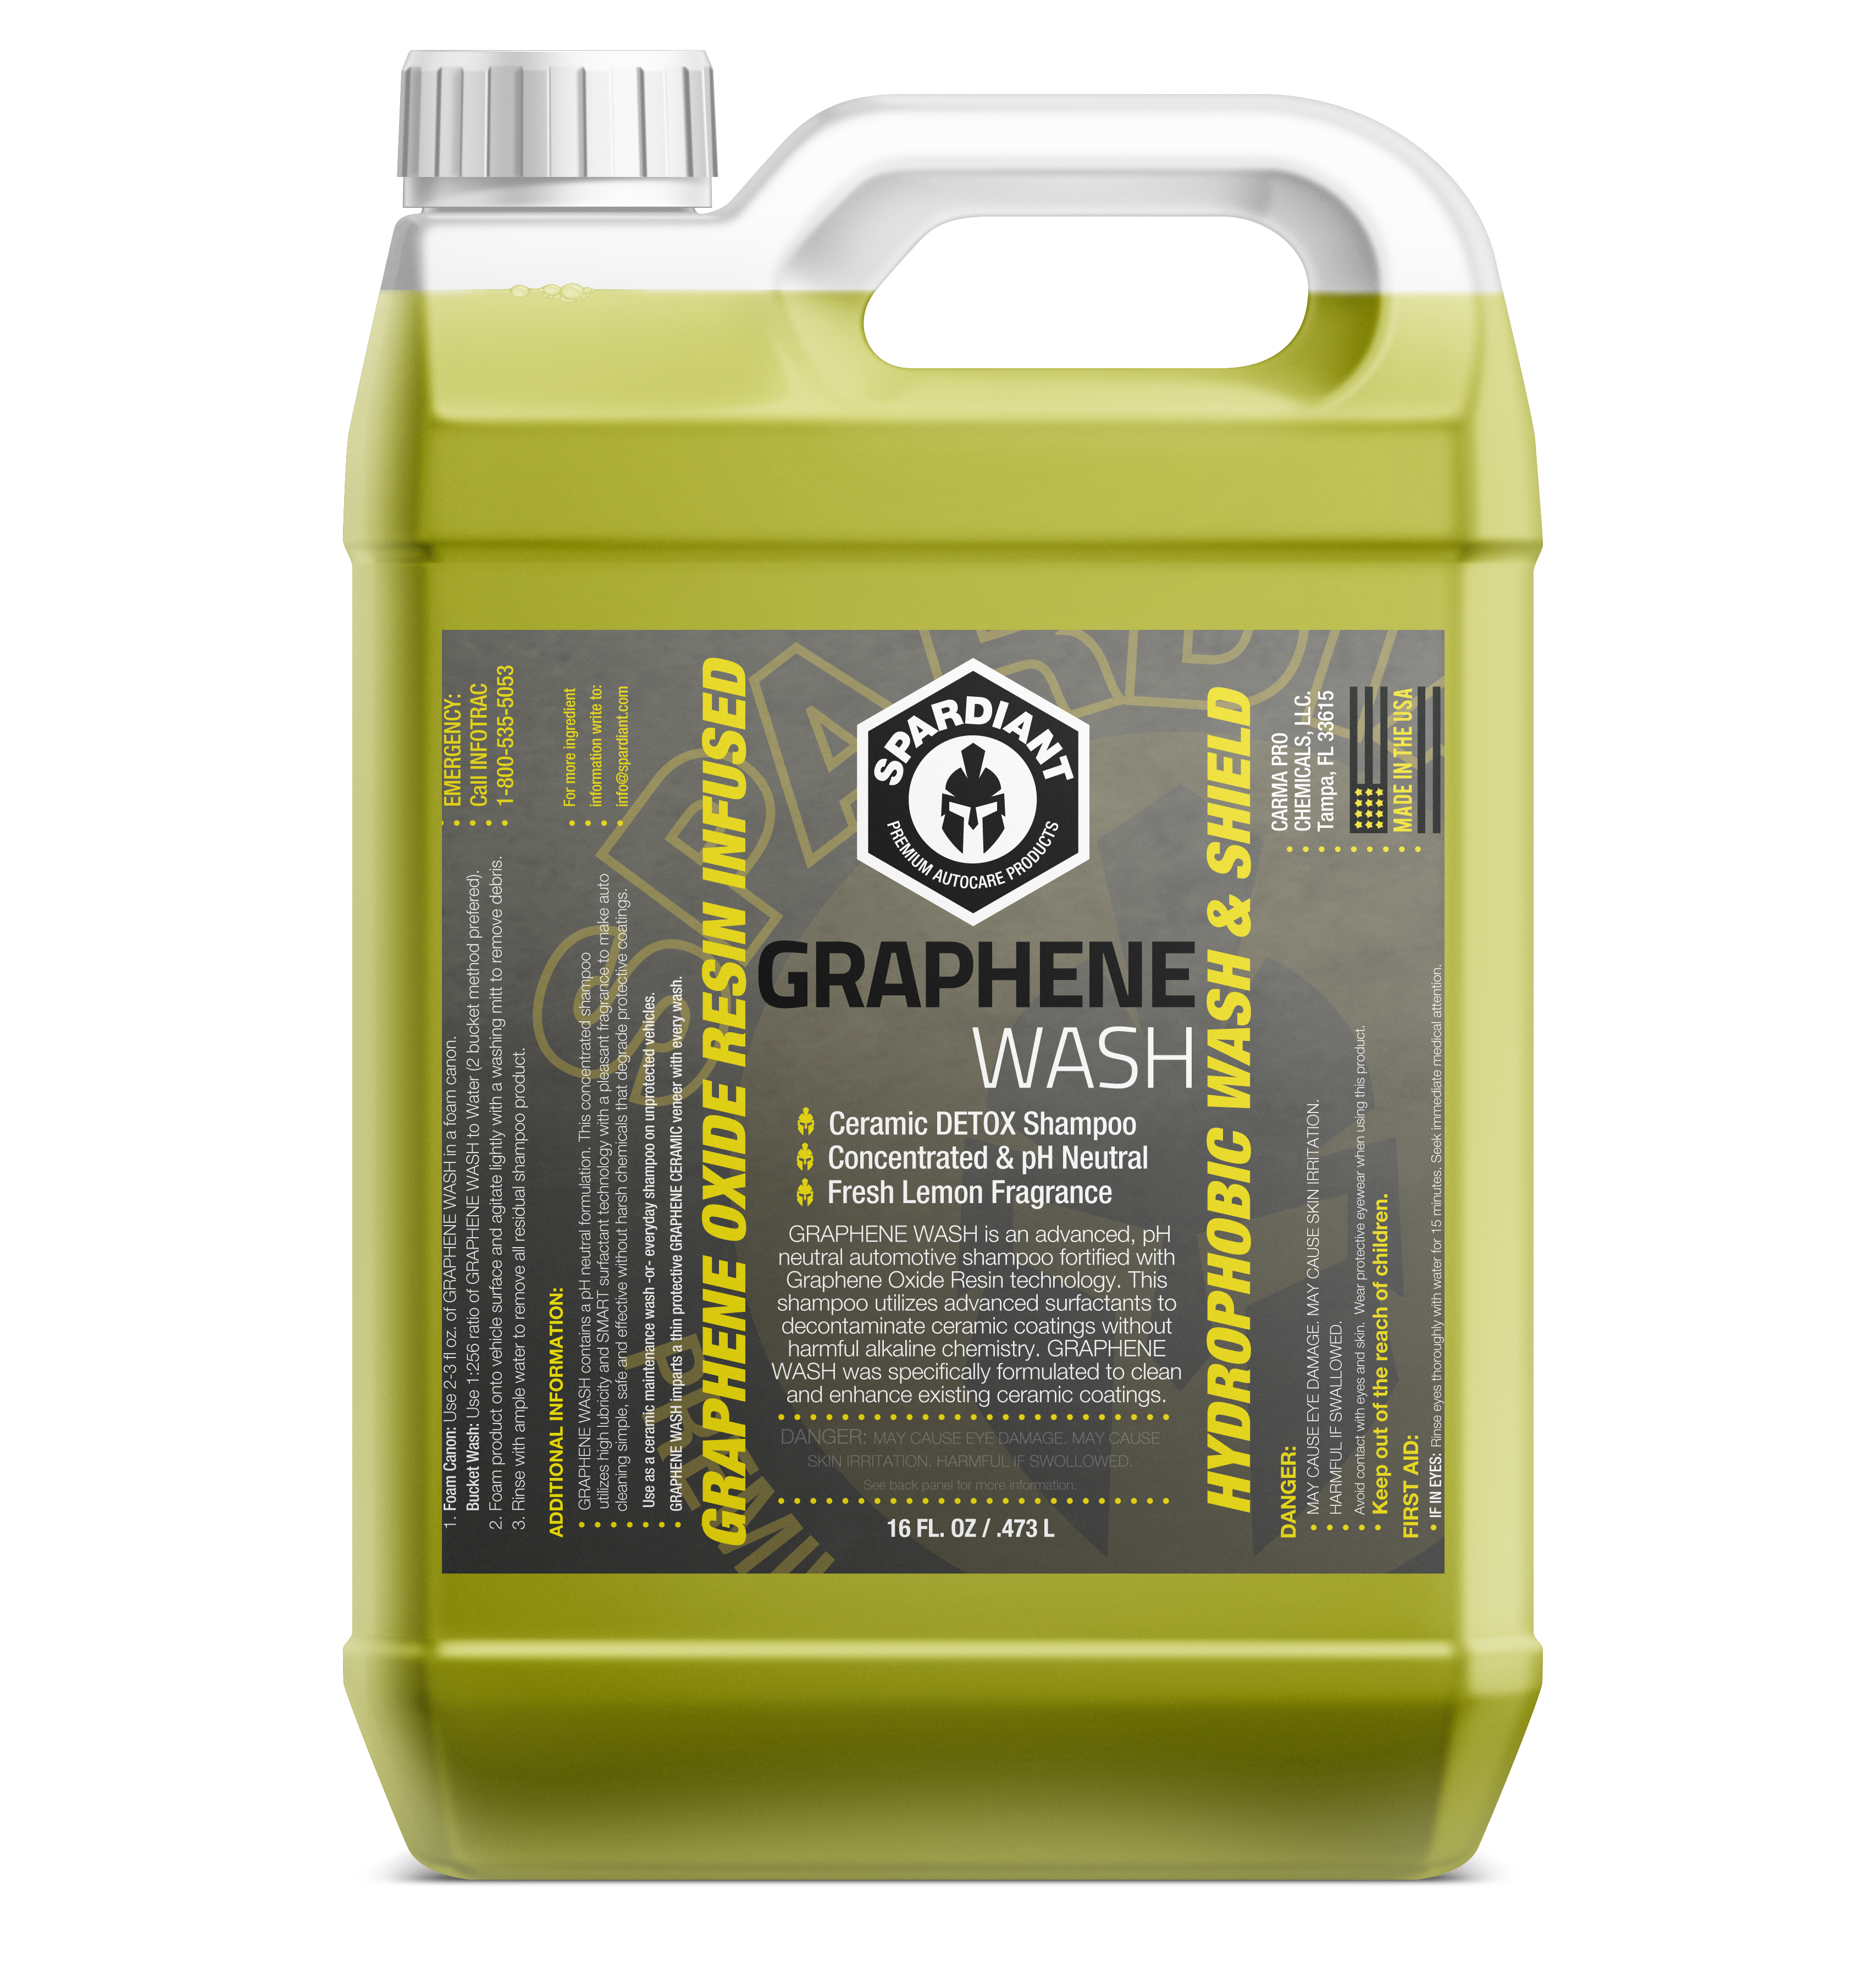 GRAPHENE WASH -SPARDIANT Graphene Shampoo